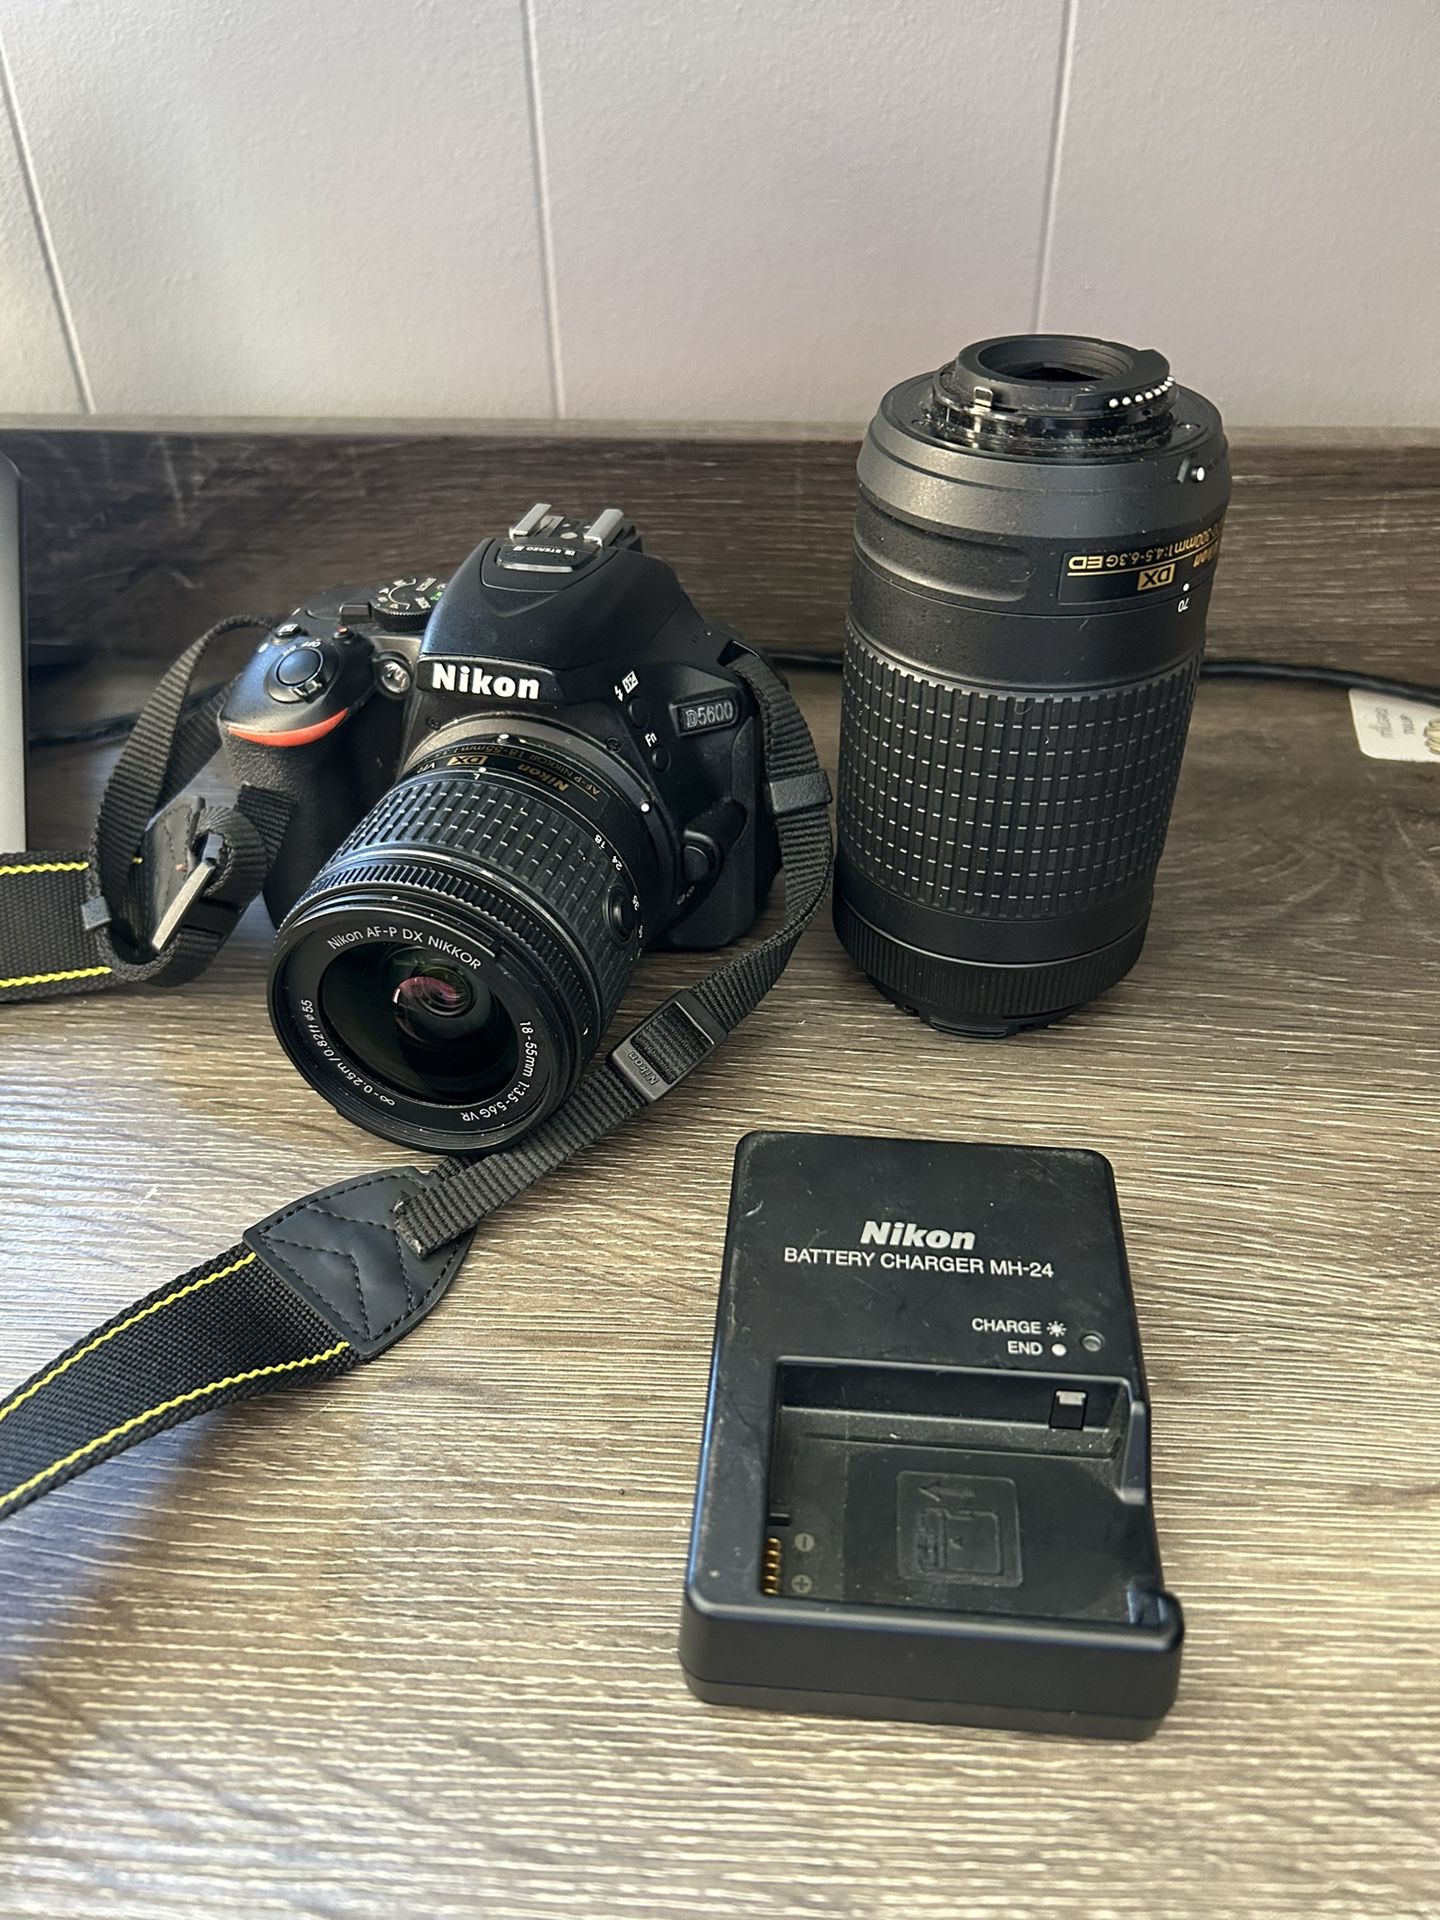 Nikon: D6500 DSLR w/ *FREE* Deluxe Backpack 